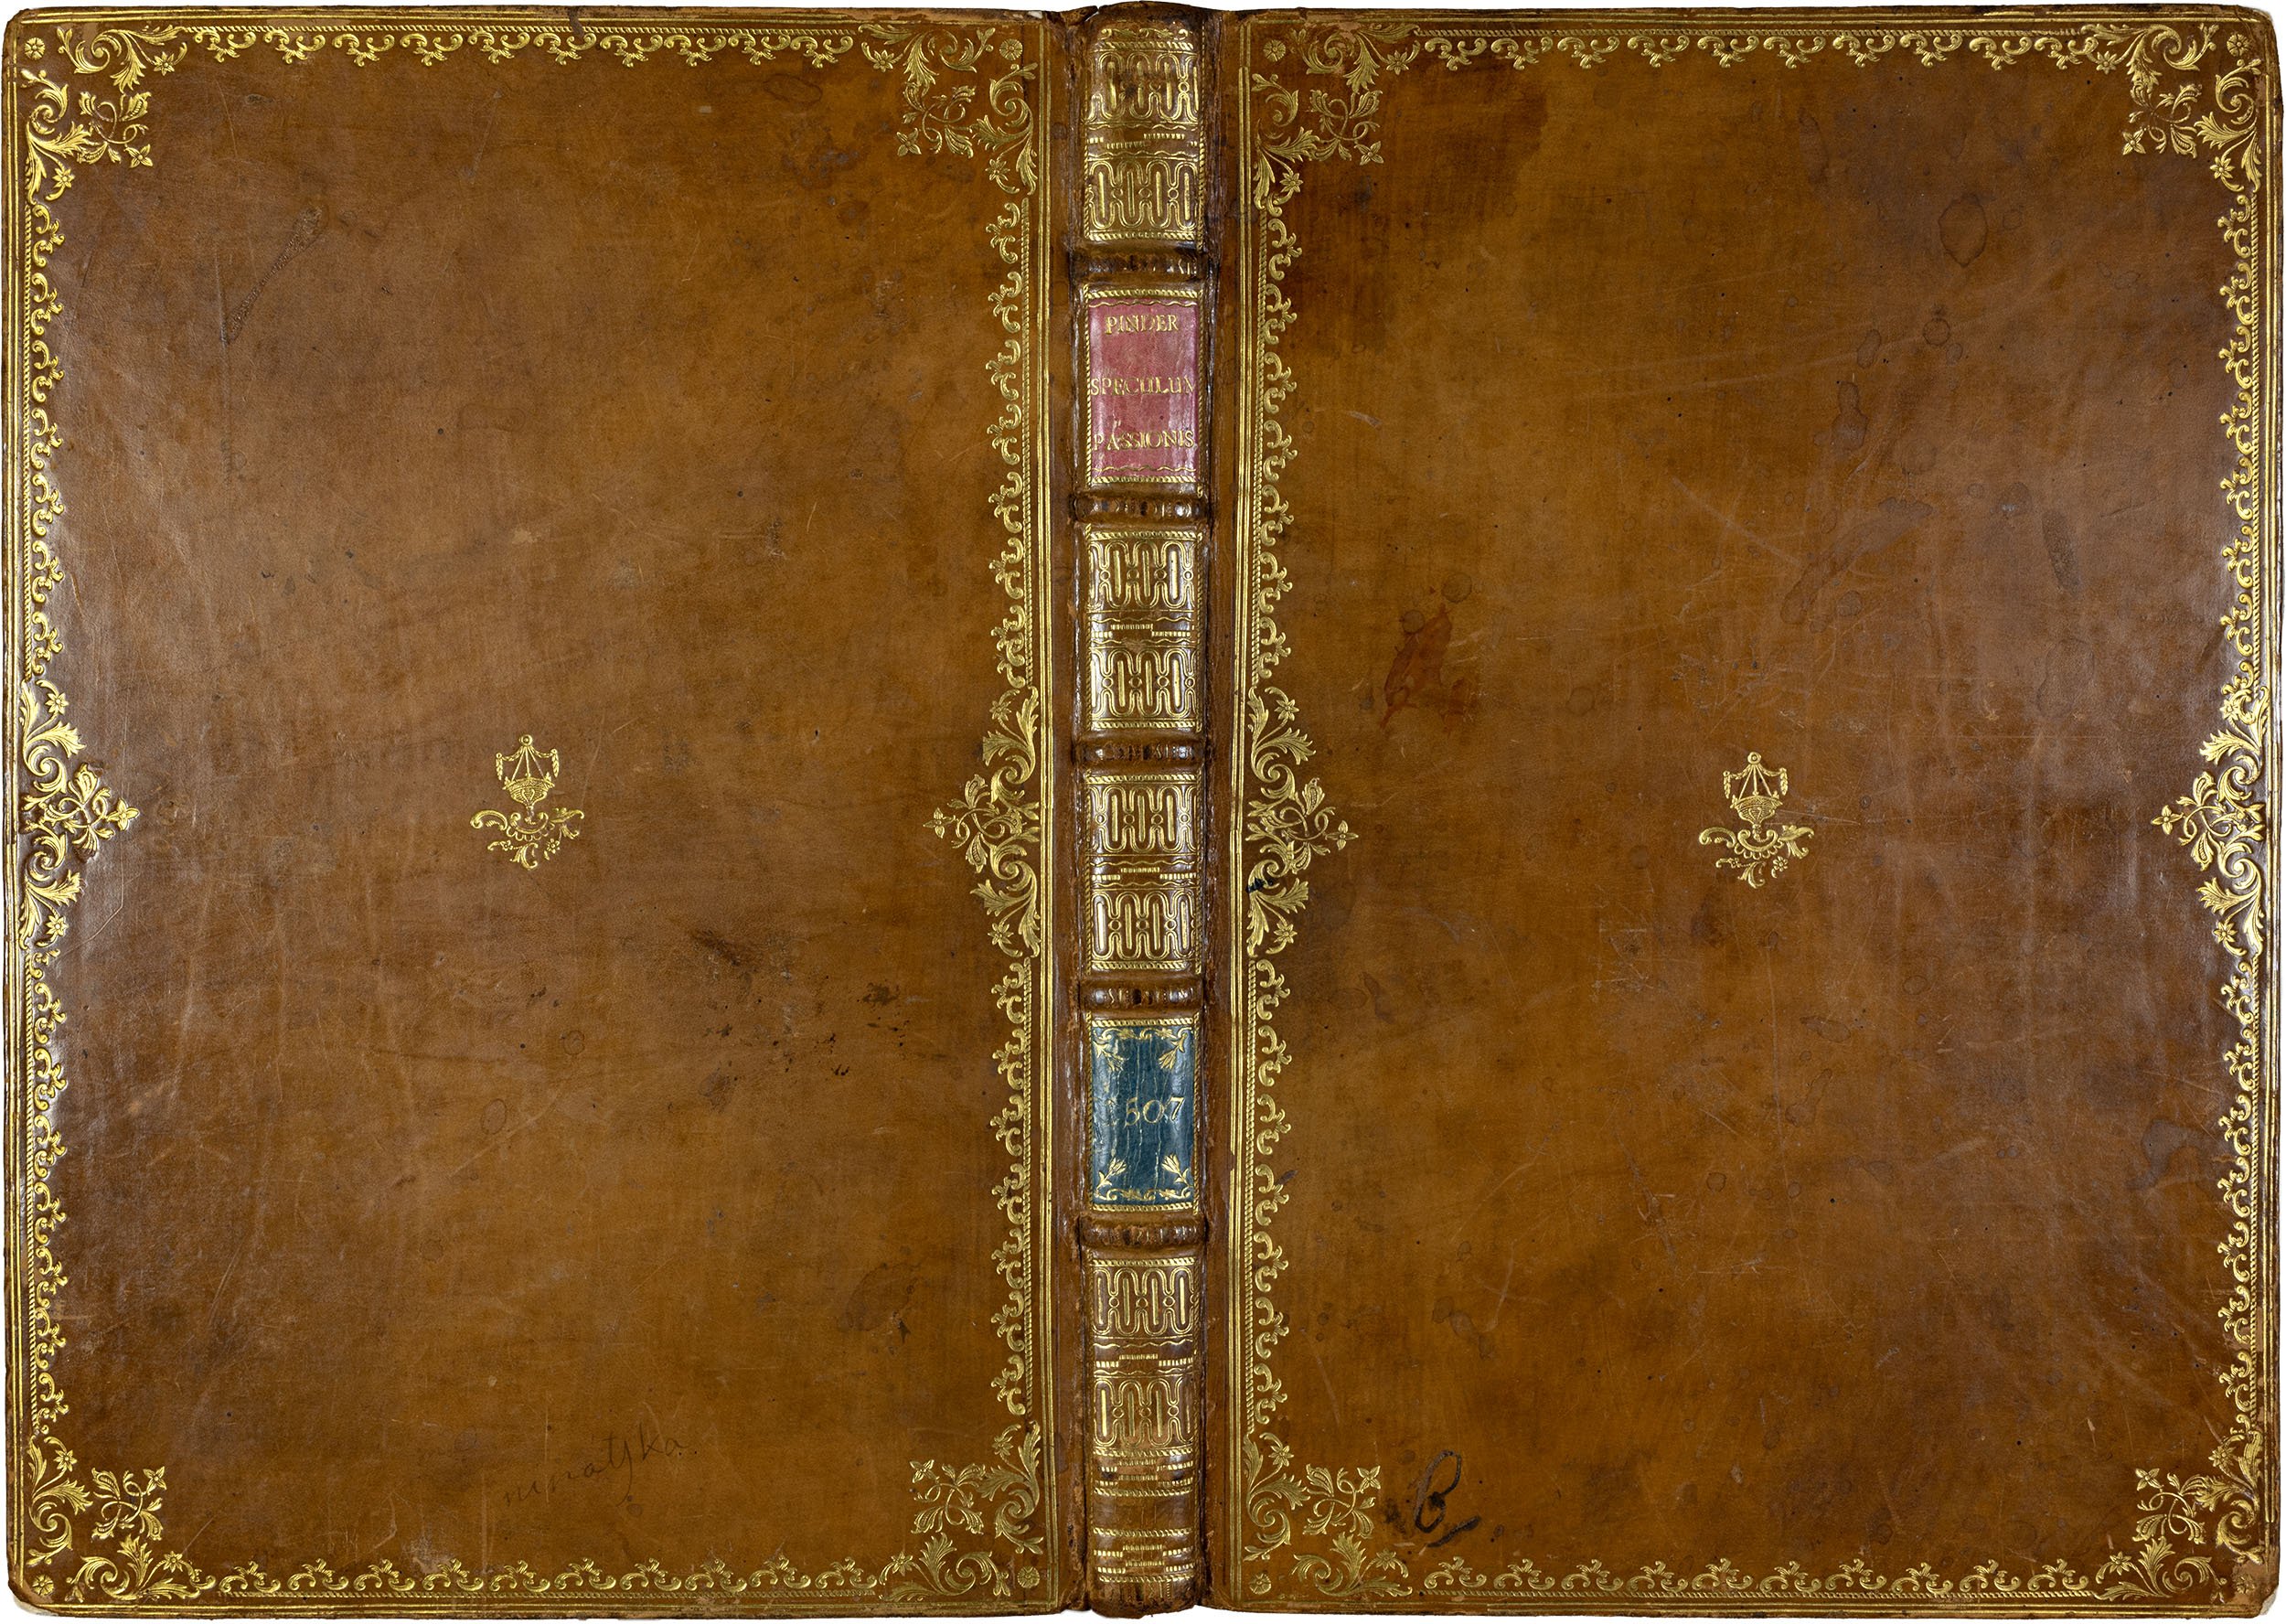 speculum-passionis-pinder-1507-first edition-coloured-woodcuts-schaeufelein-baldung-grien-1.jpg